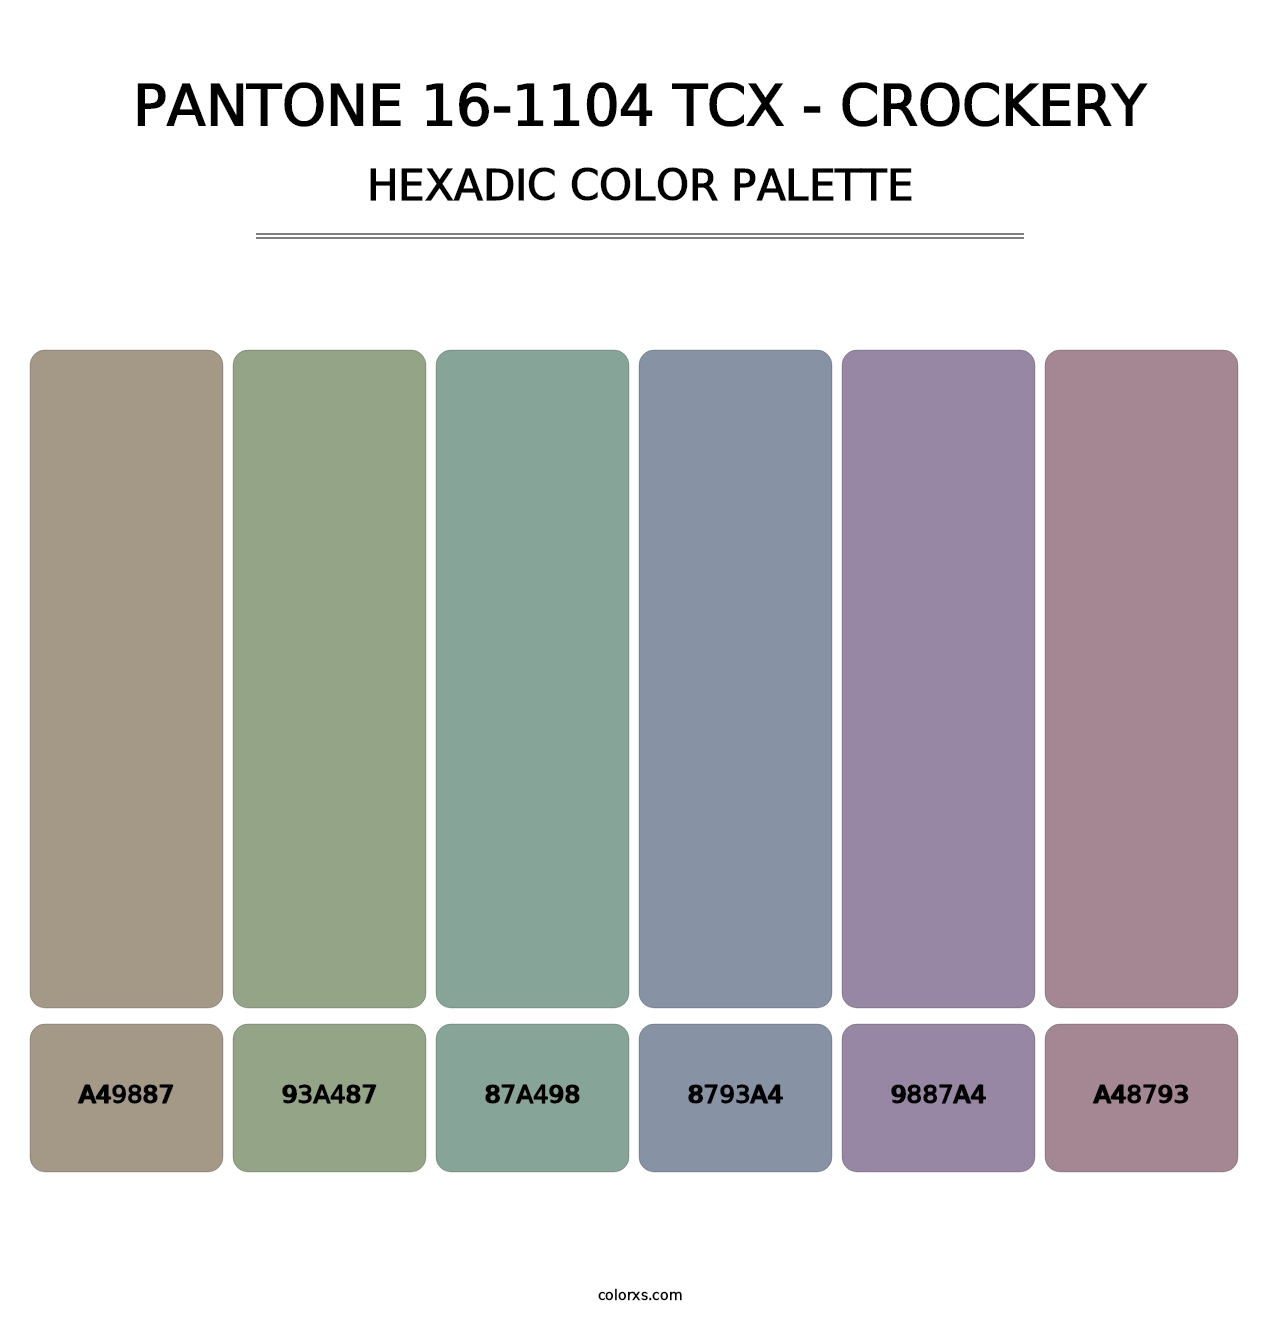 PANTONE 16-1104 TCX - Crockery - Hexadic Color Palette